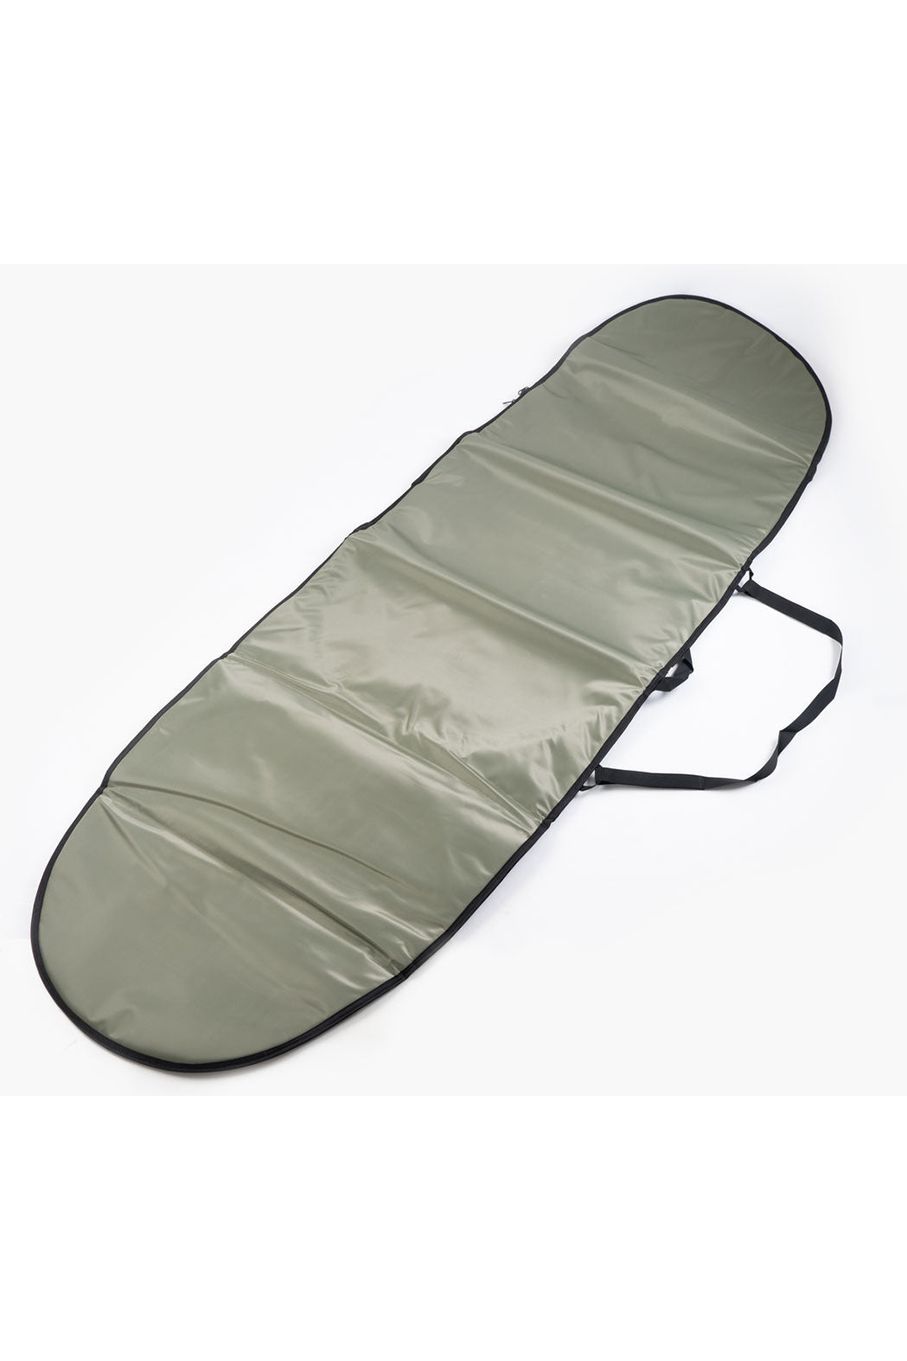 10'6 Economy SUP Board Bag